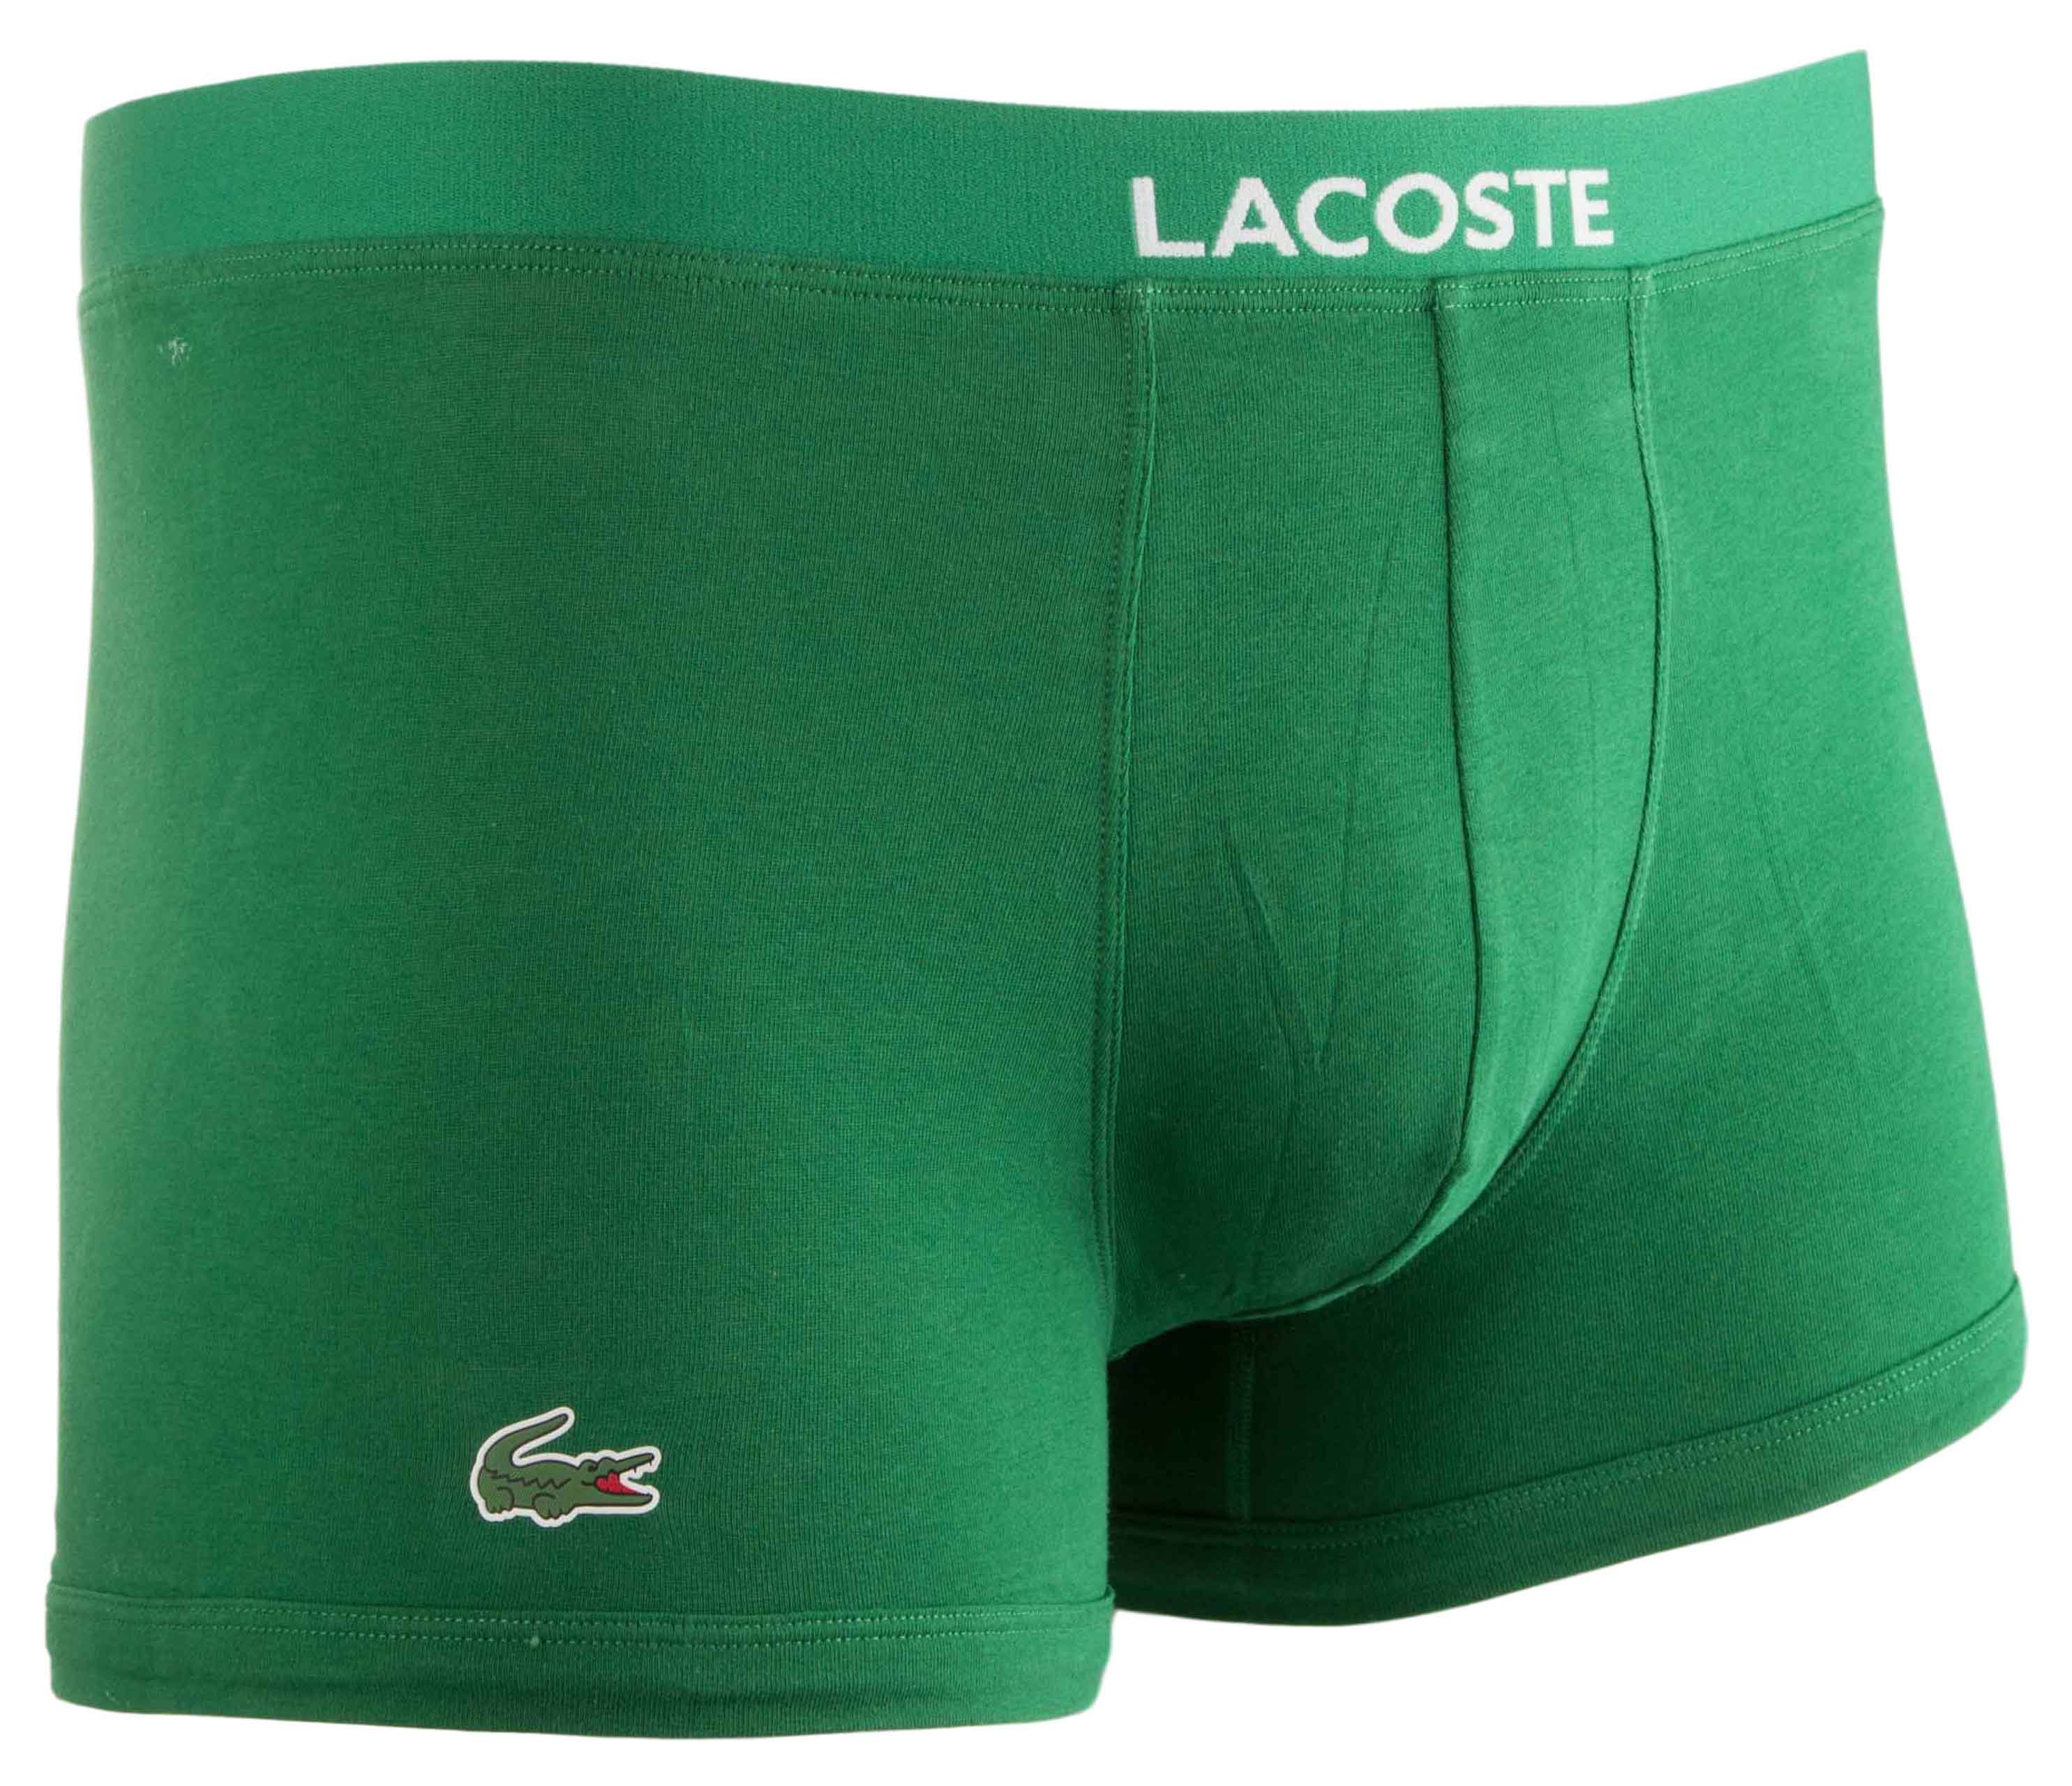 LACOSTE Men's Boxer Trunks 2-Pack Cotton Stretch Underwear